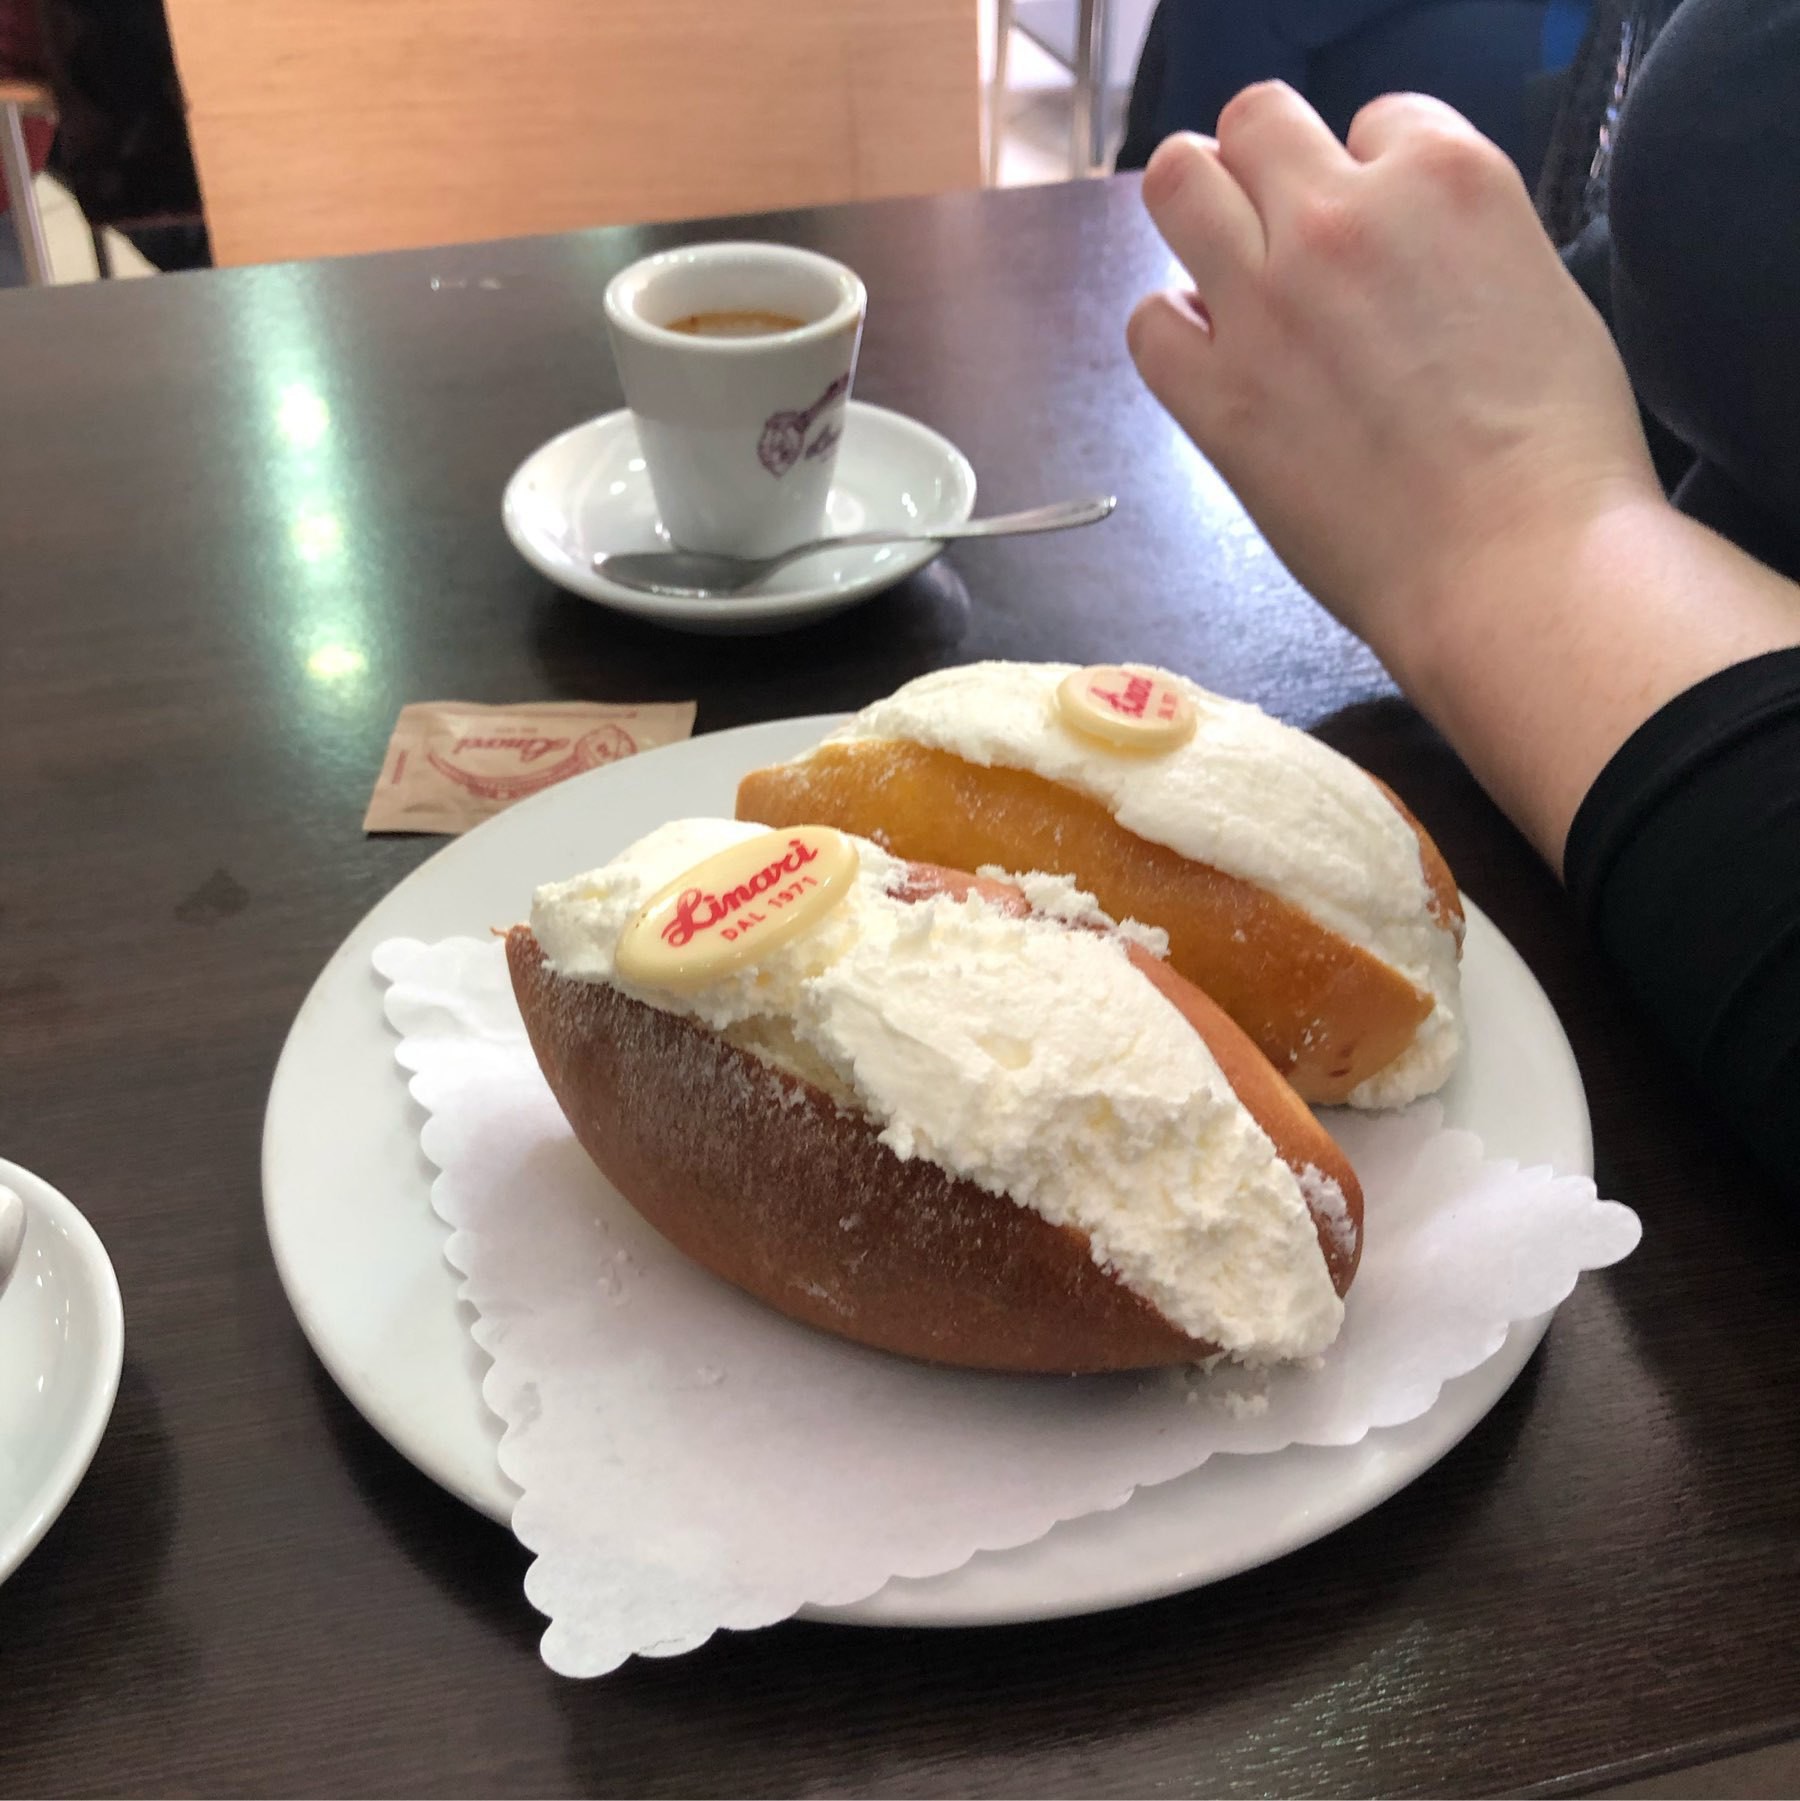 Nice cake pastry with cream